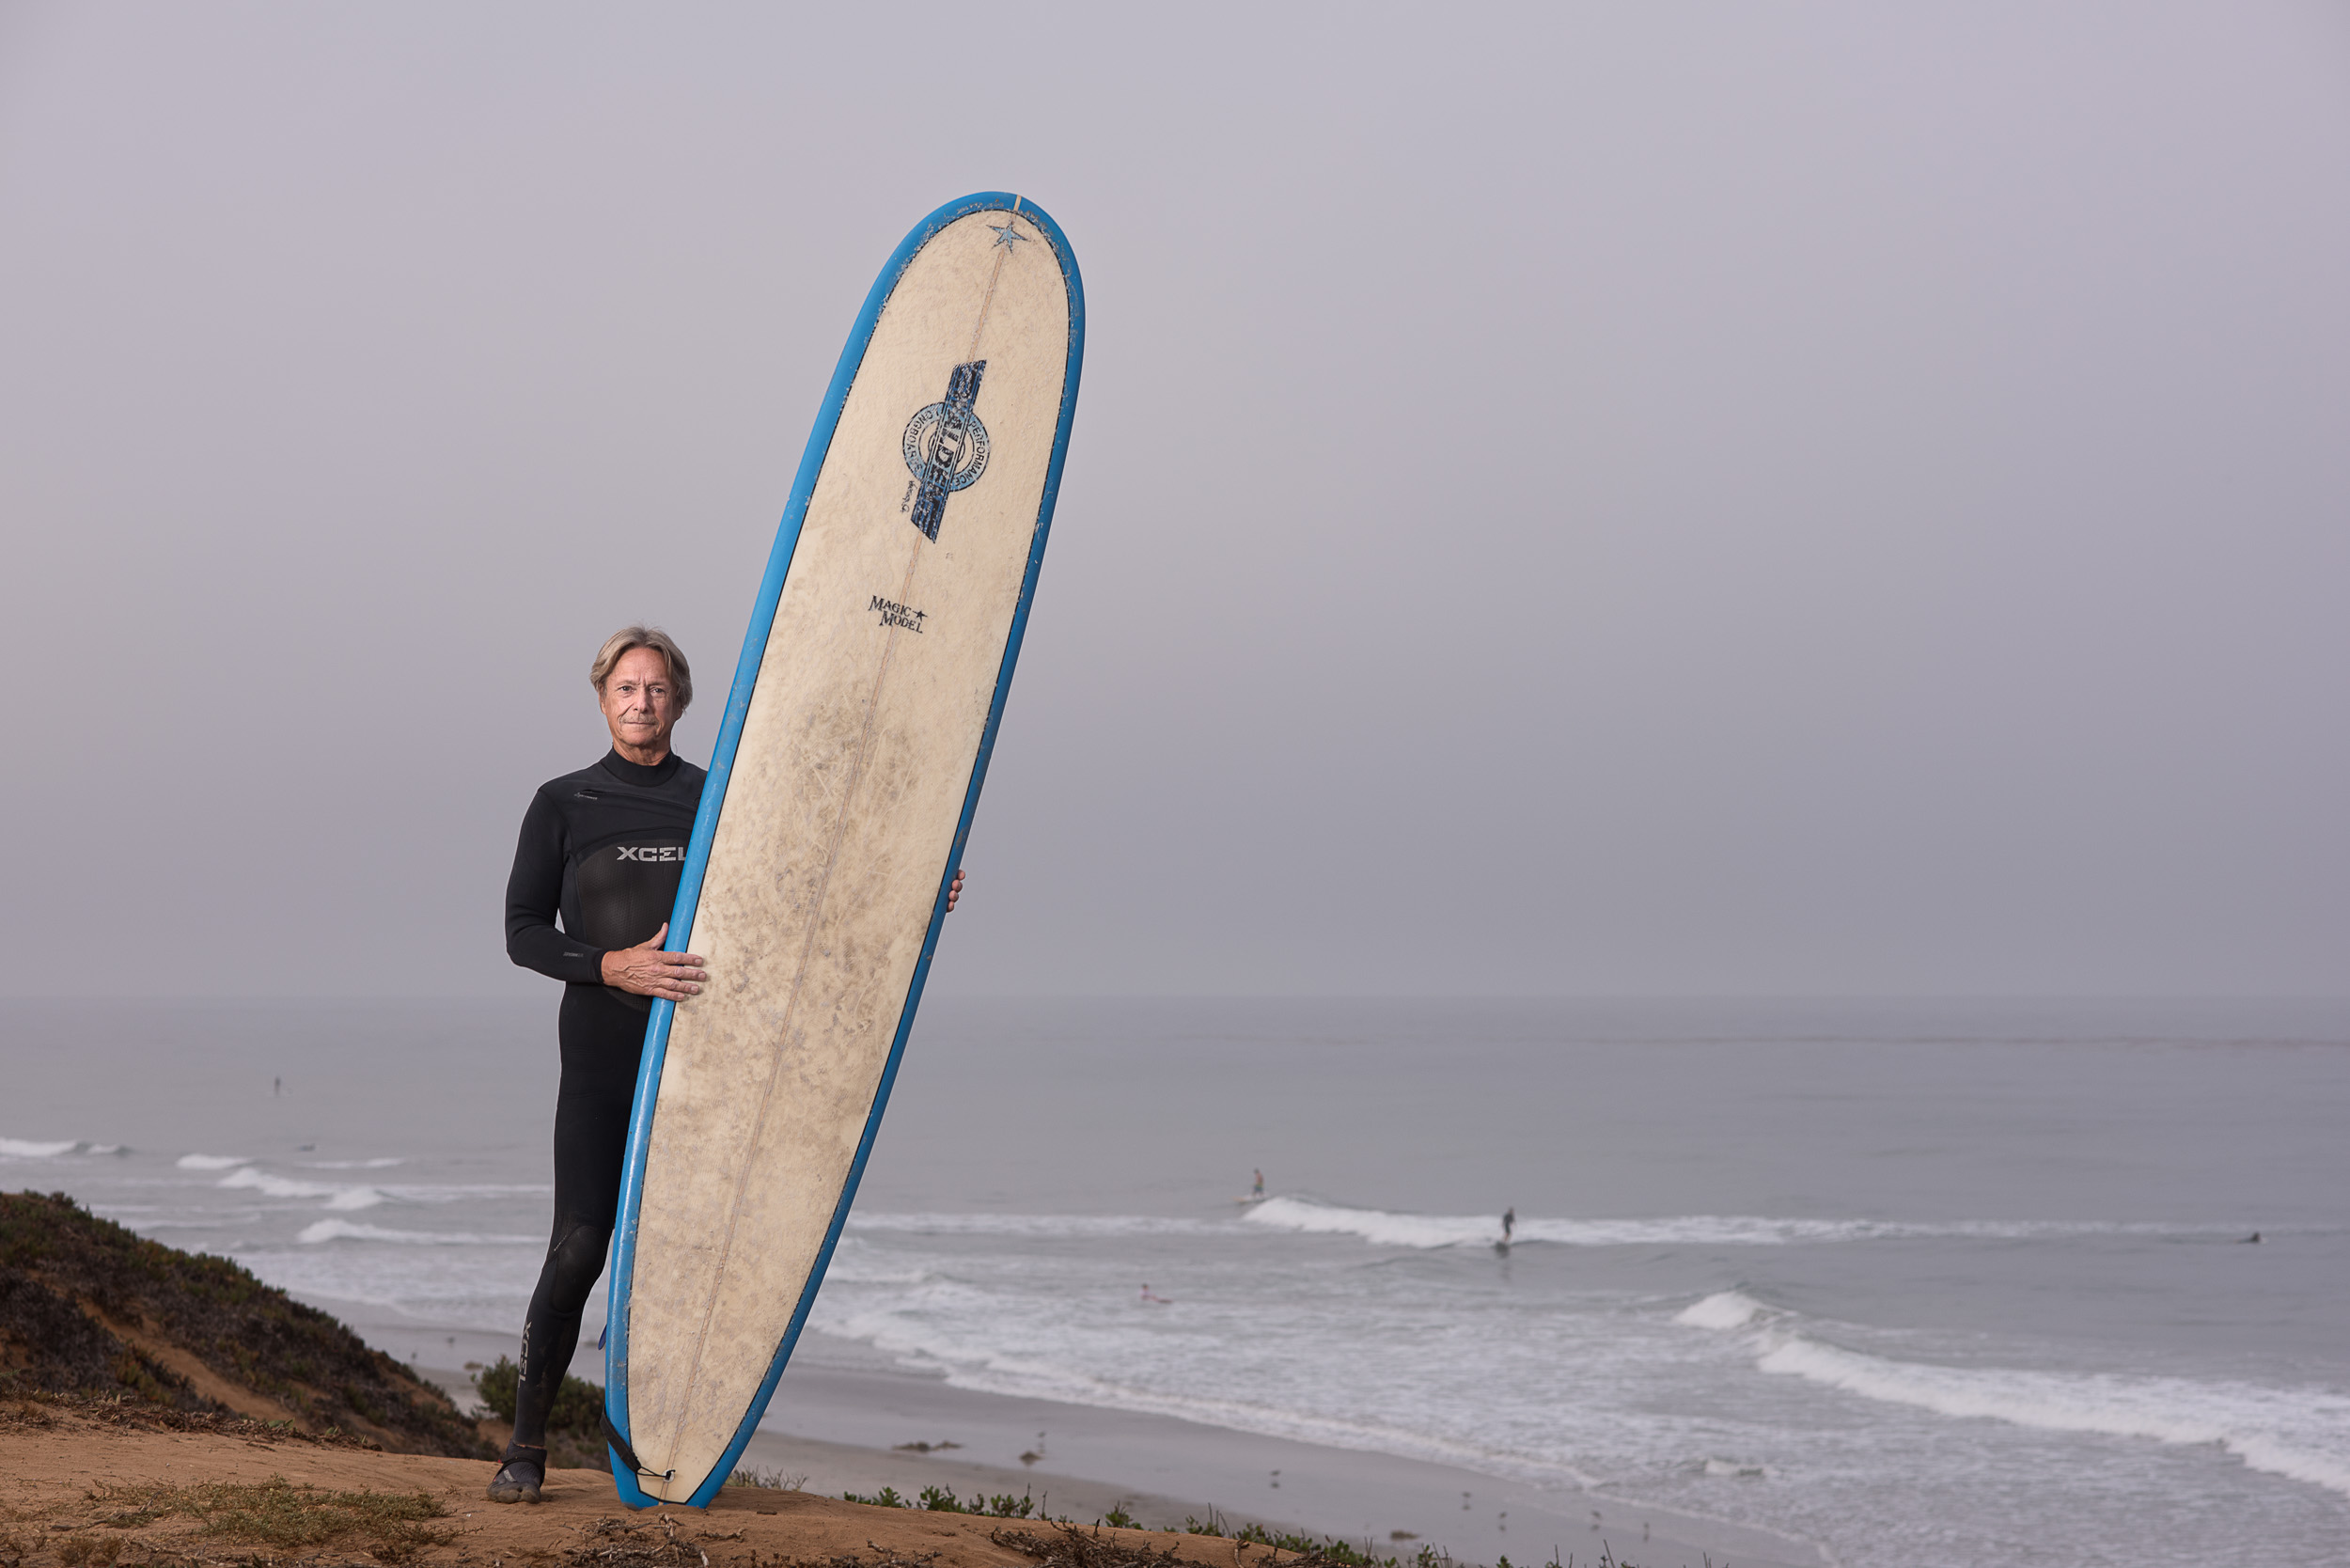 An older surfer portrait on a bluff overlooking the ocean.